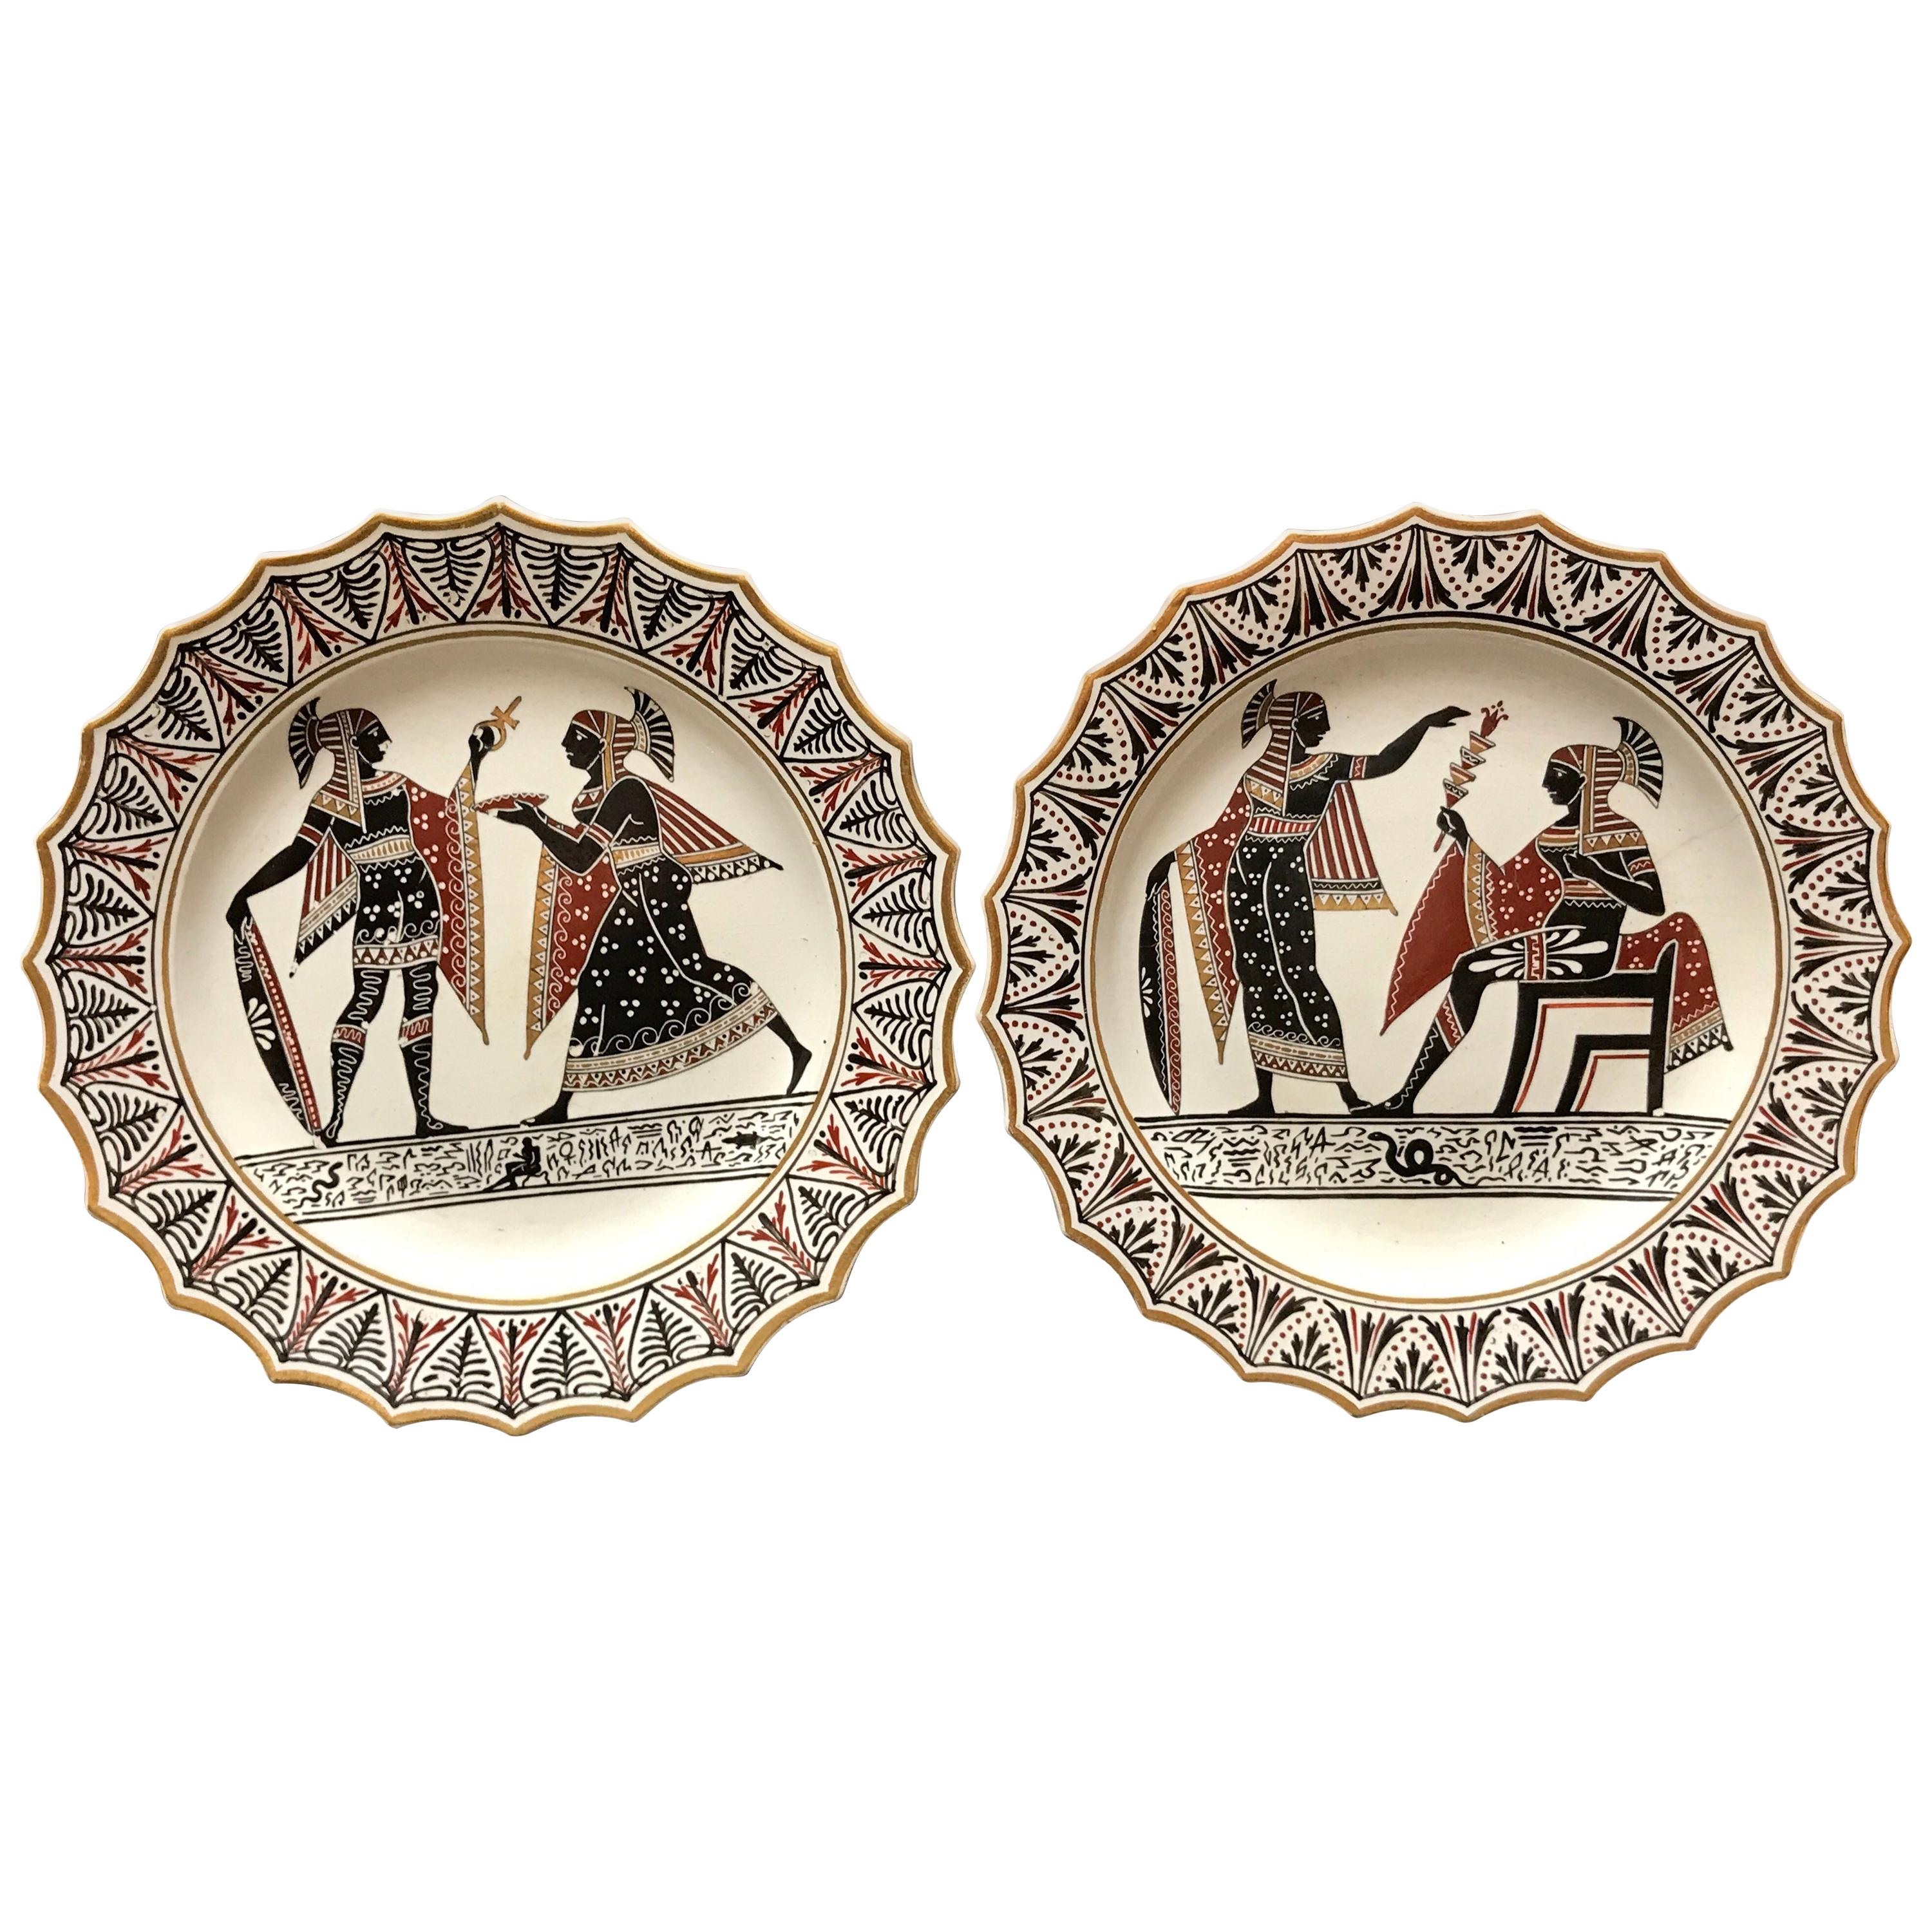 Pair of Giustiniani Egyptomania Pottery Plates with Gilt Borders For Sale